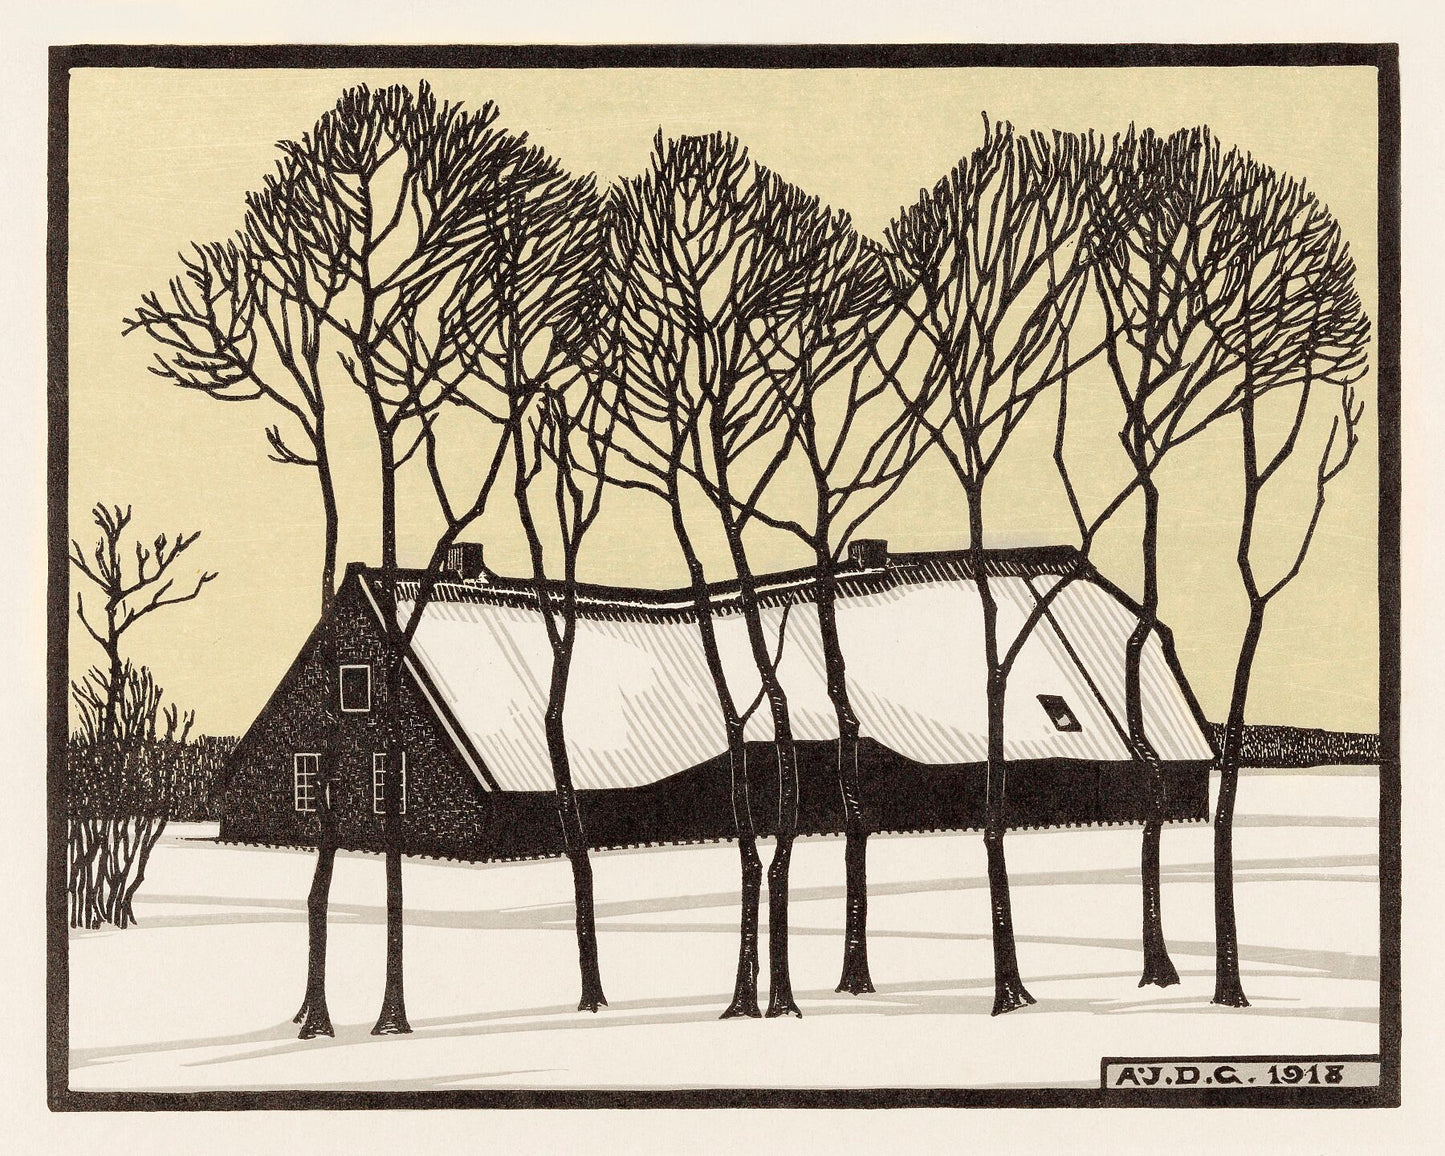 Farm in the Snow by Julie de Graag - 1918